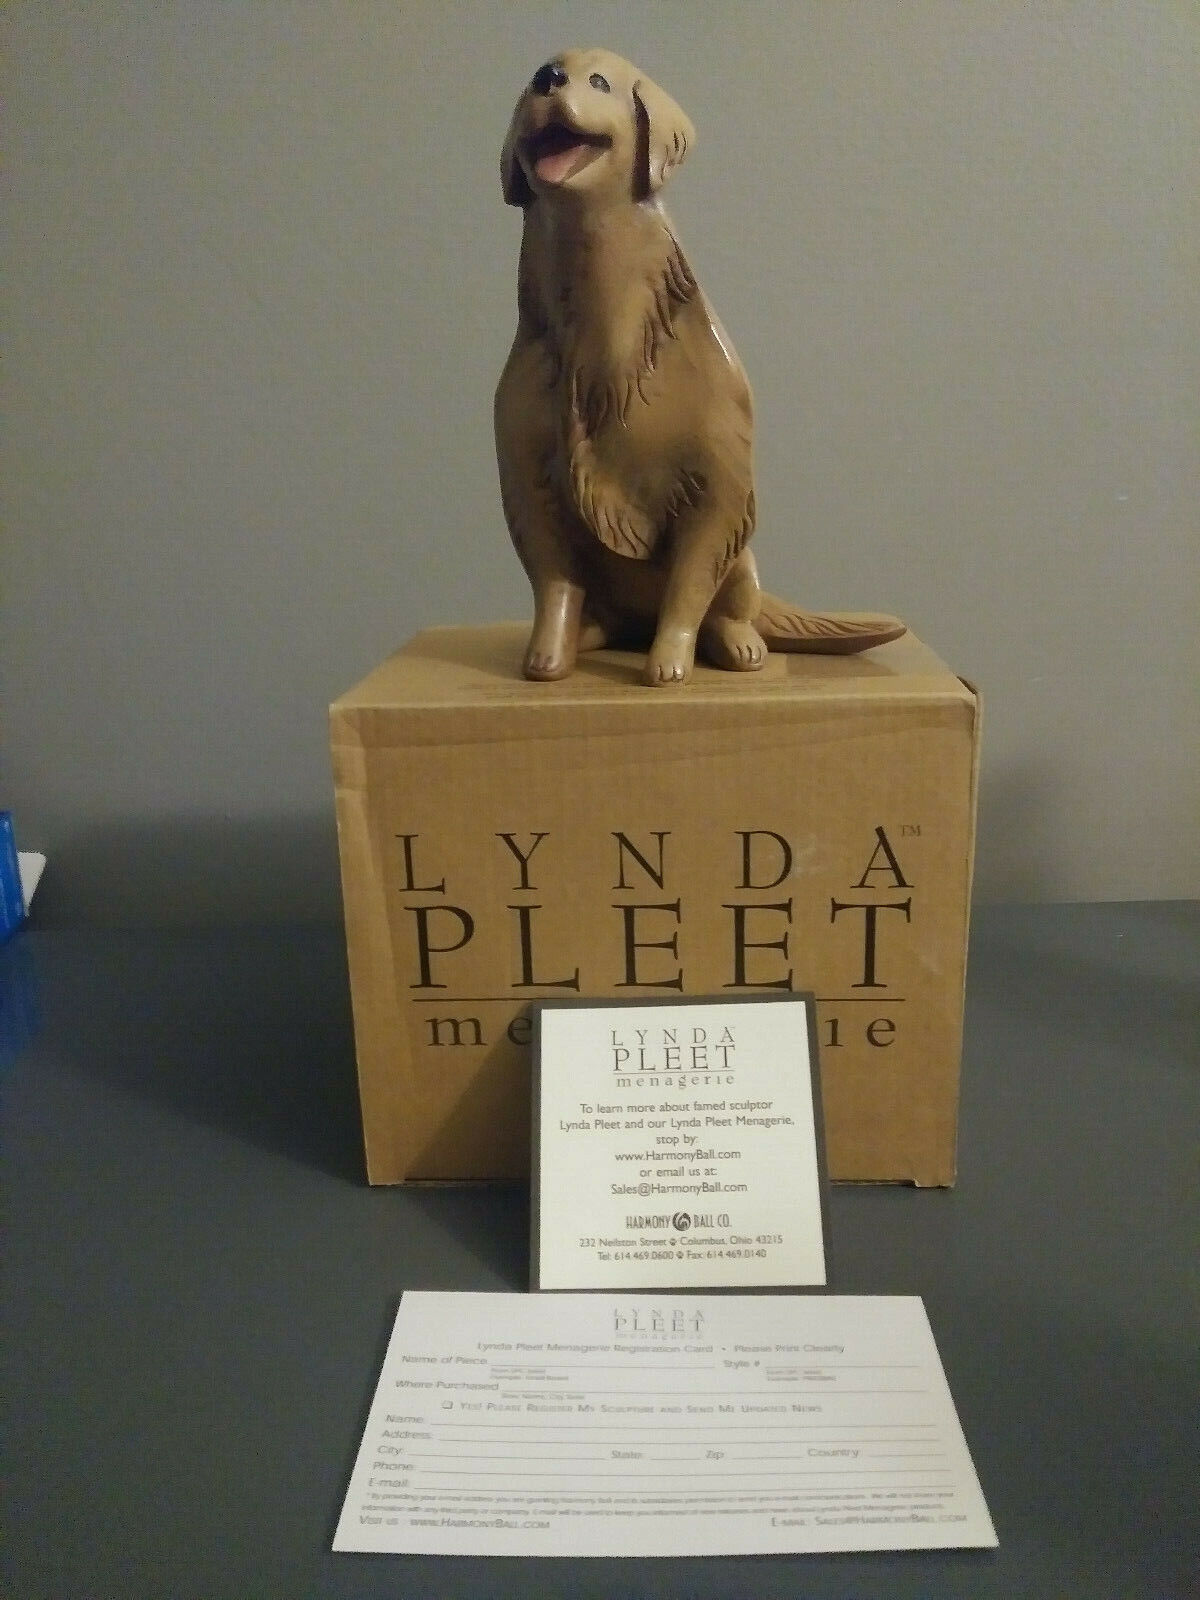 VINTAGE LYNDA PLEET GOLDEN RETRIEVER DOG FIGURINE, SIGNED BY THE ARTIST